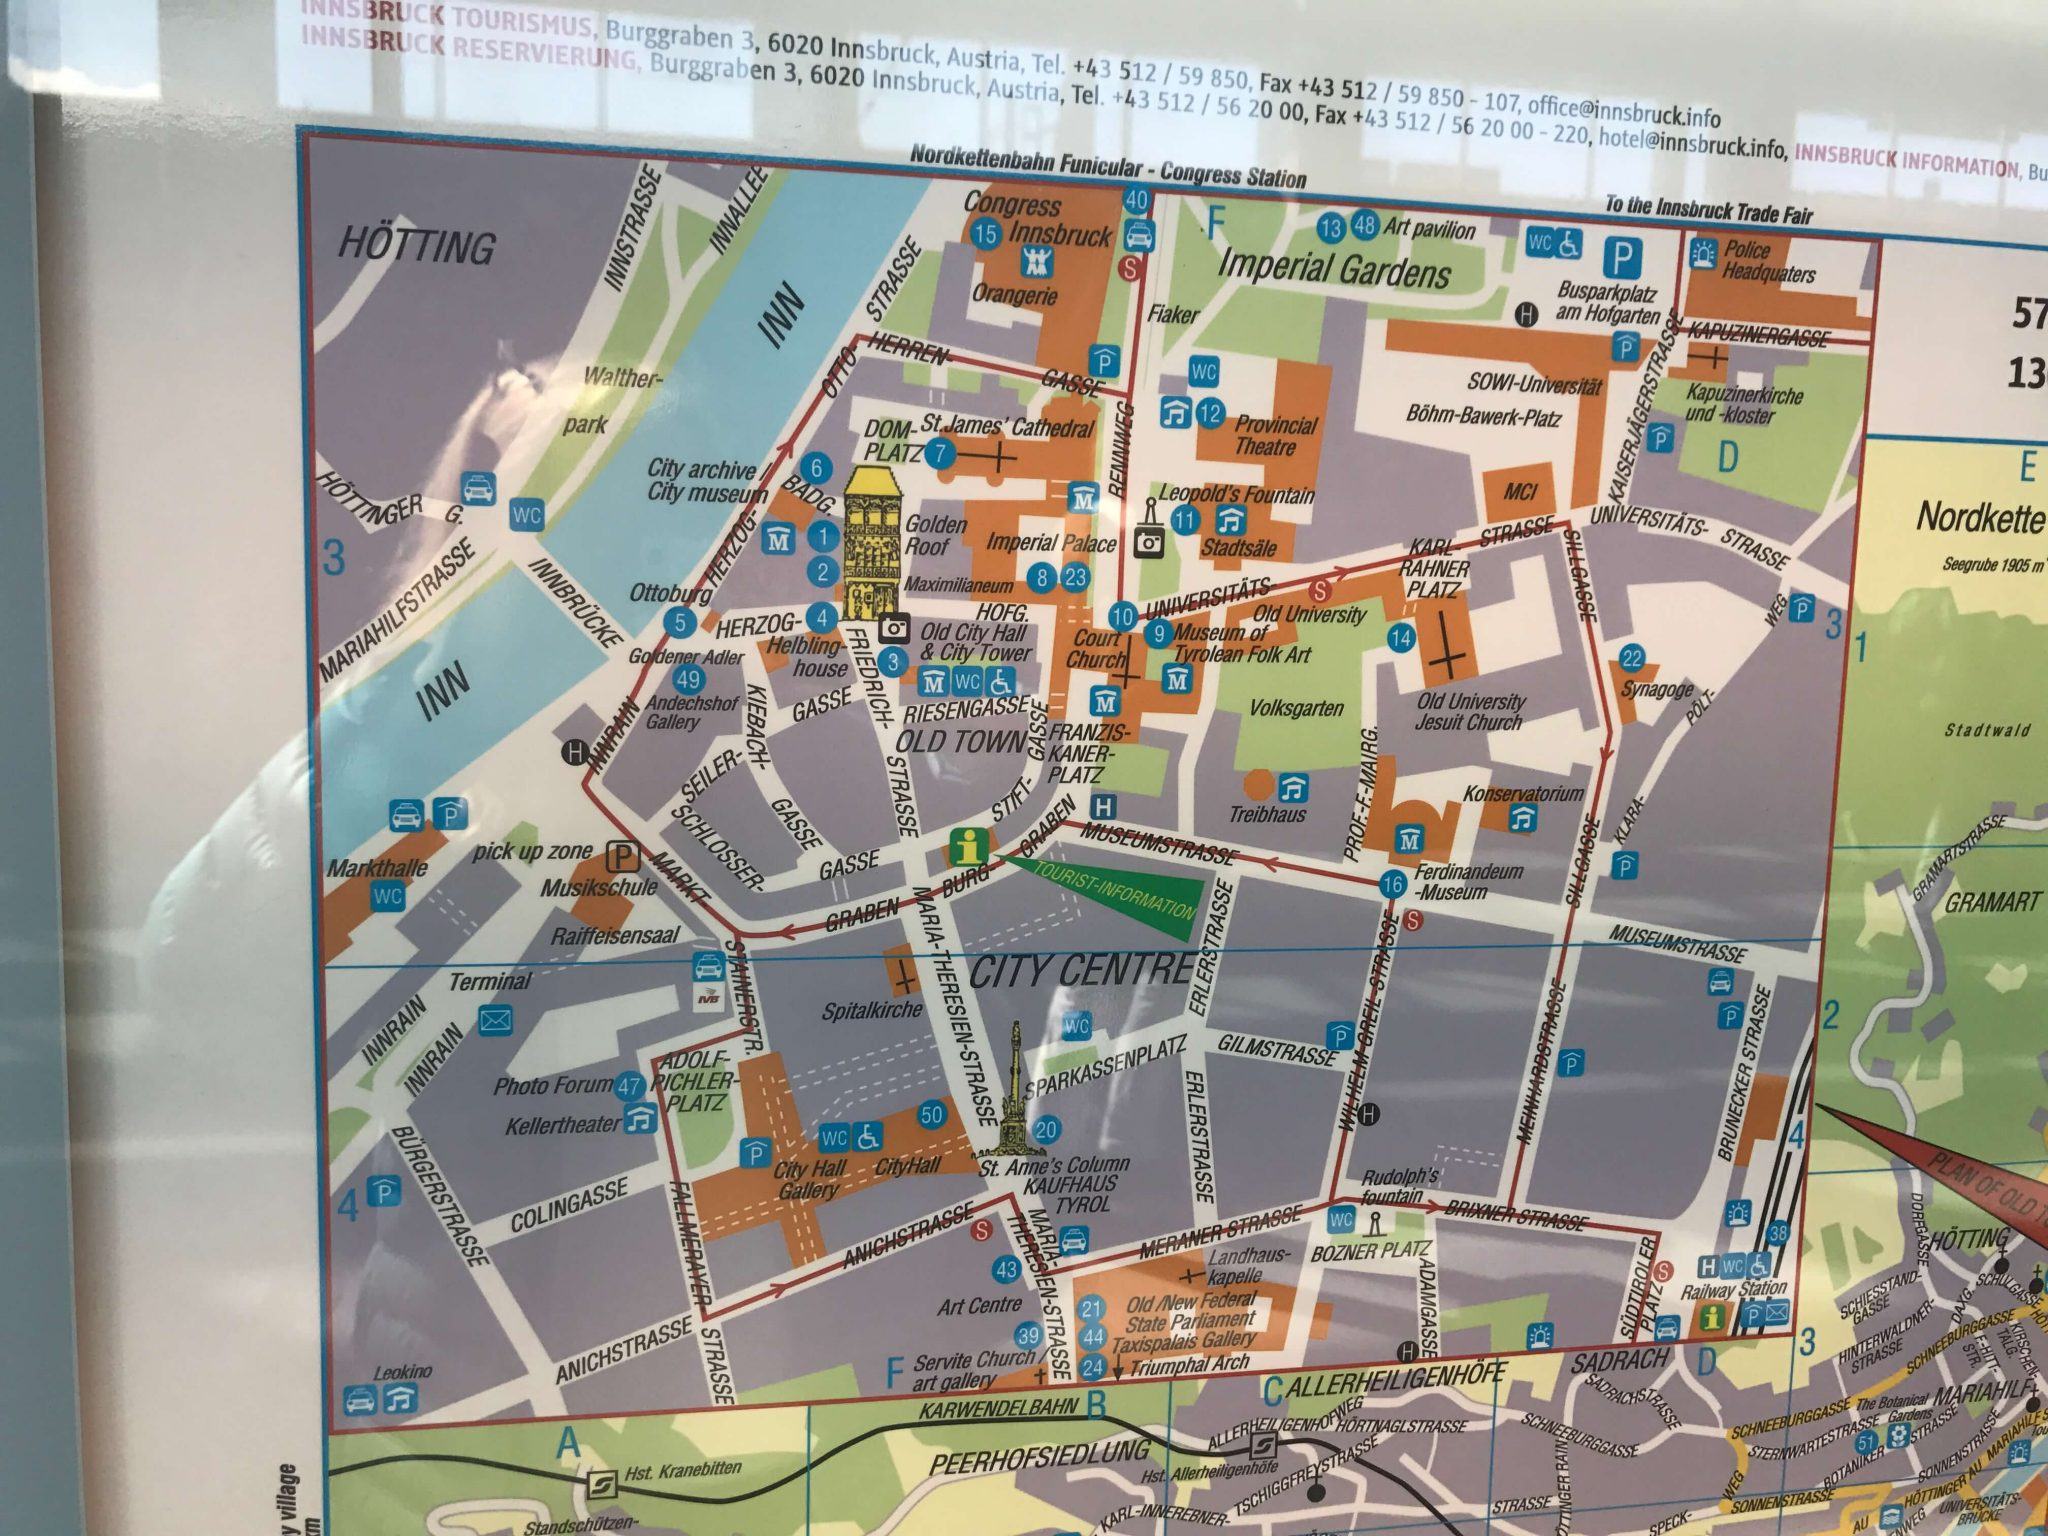 map of innsbruck city centre